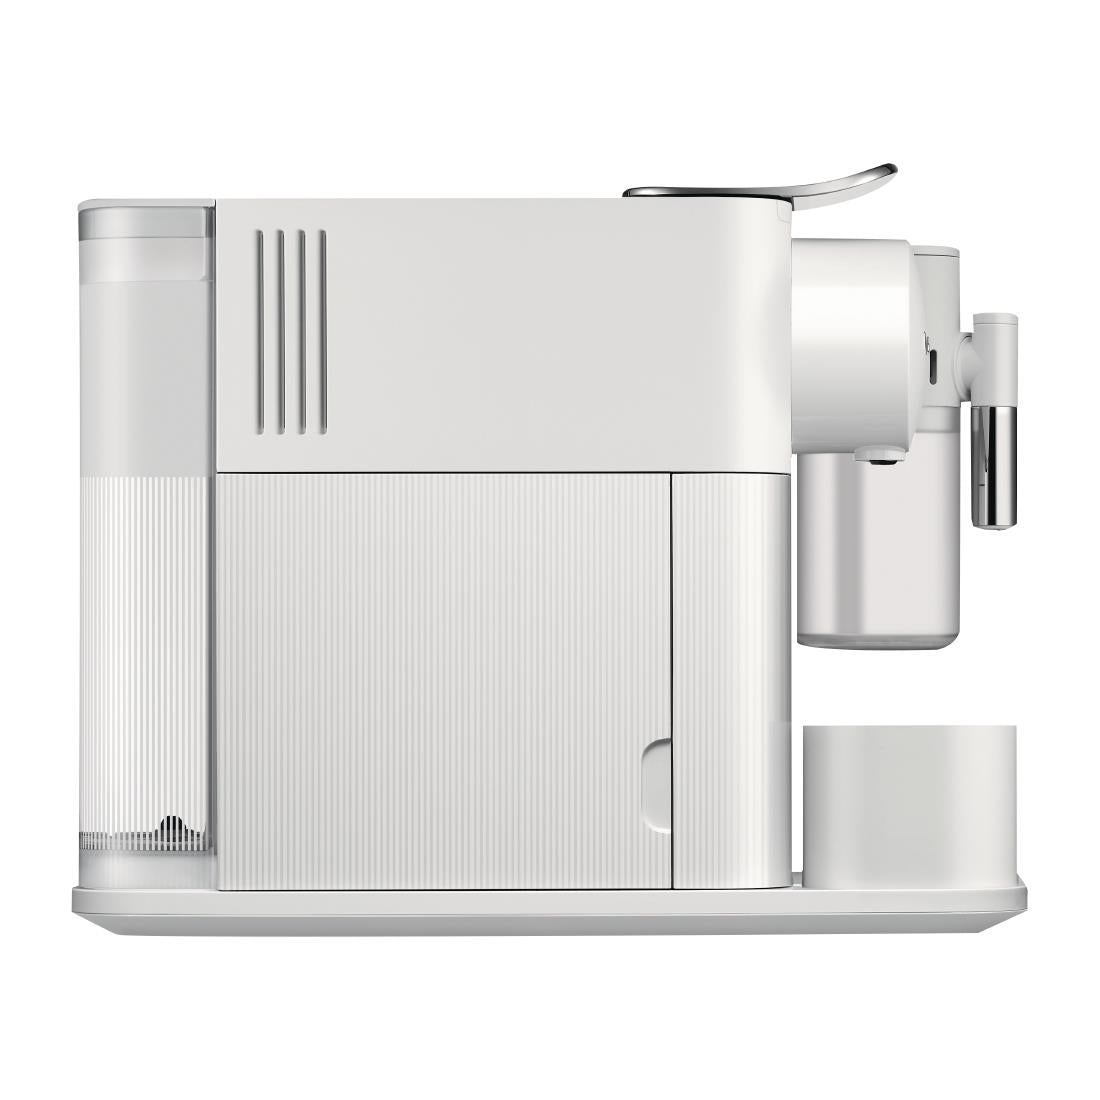 FT898 DeLonghi Nespresso Lattissima One Coffee Machine White JD Catering Equipment Solutions Ltd